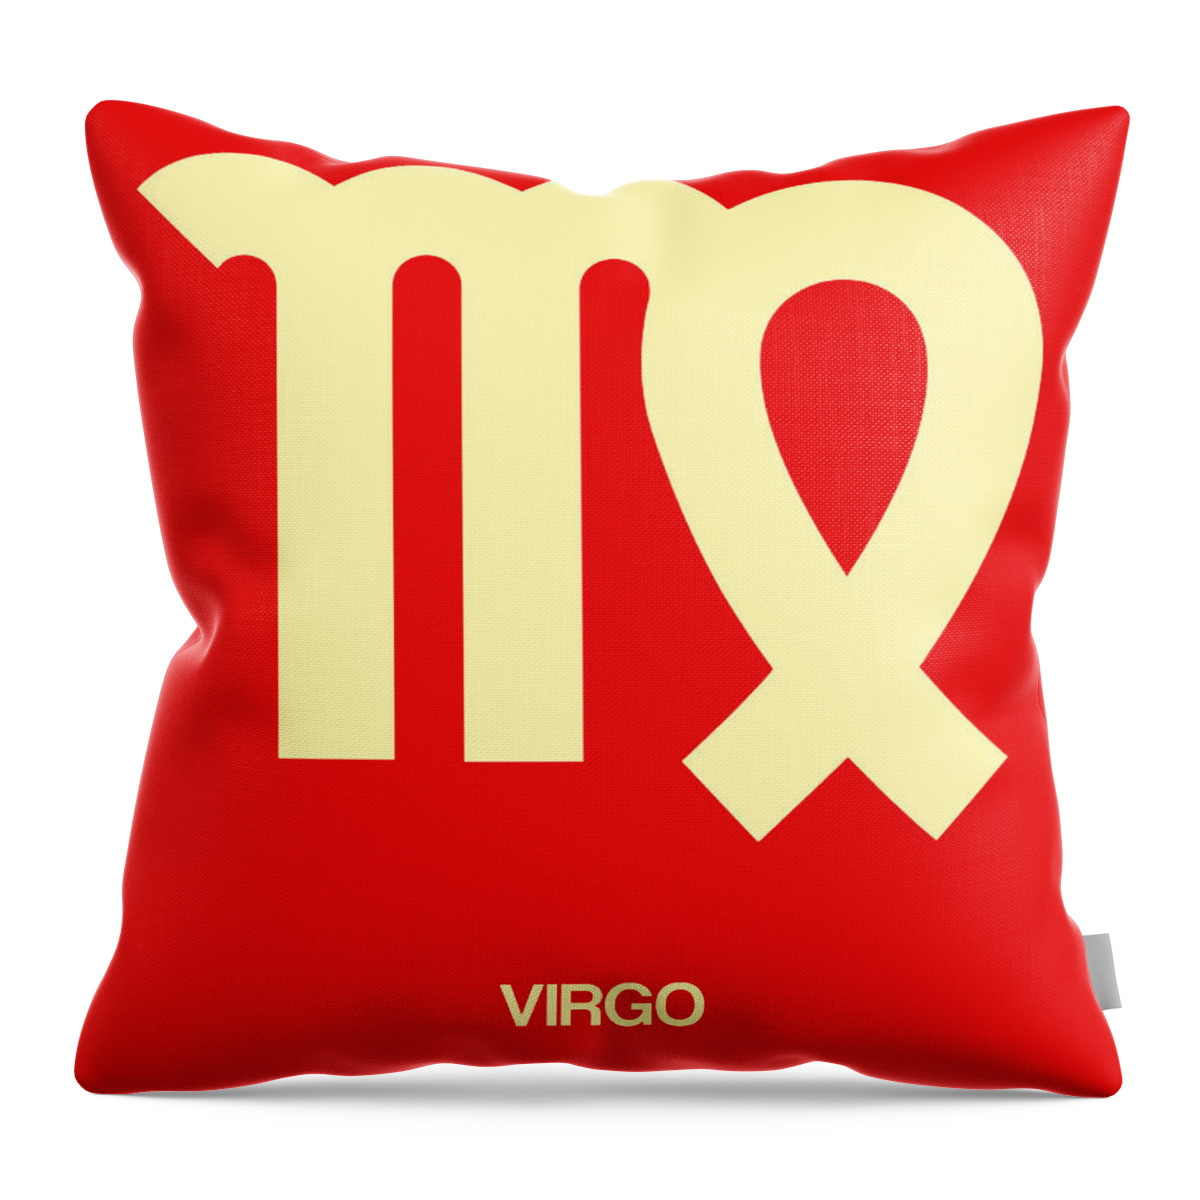  Throw Pillow featuring the digital art Virgo Zodiac Sign Yellow by Naxart Studio